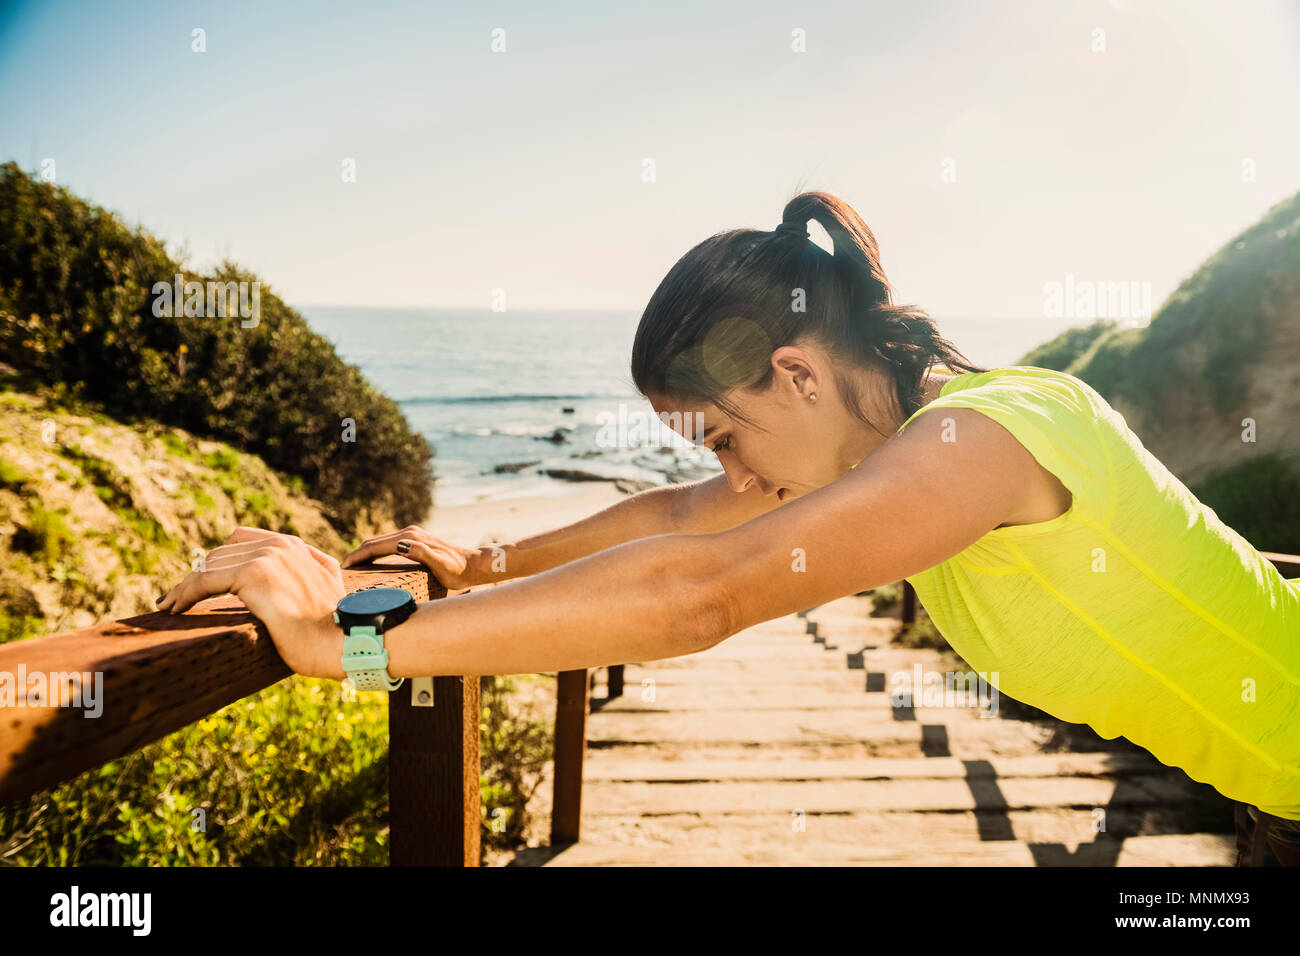 USA, California, Newport Beach, Woman stretching on beach Stock Photo